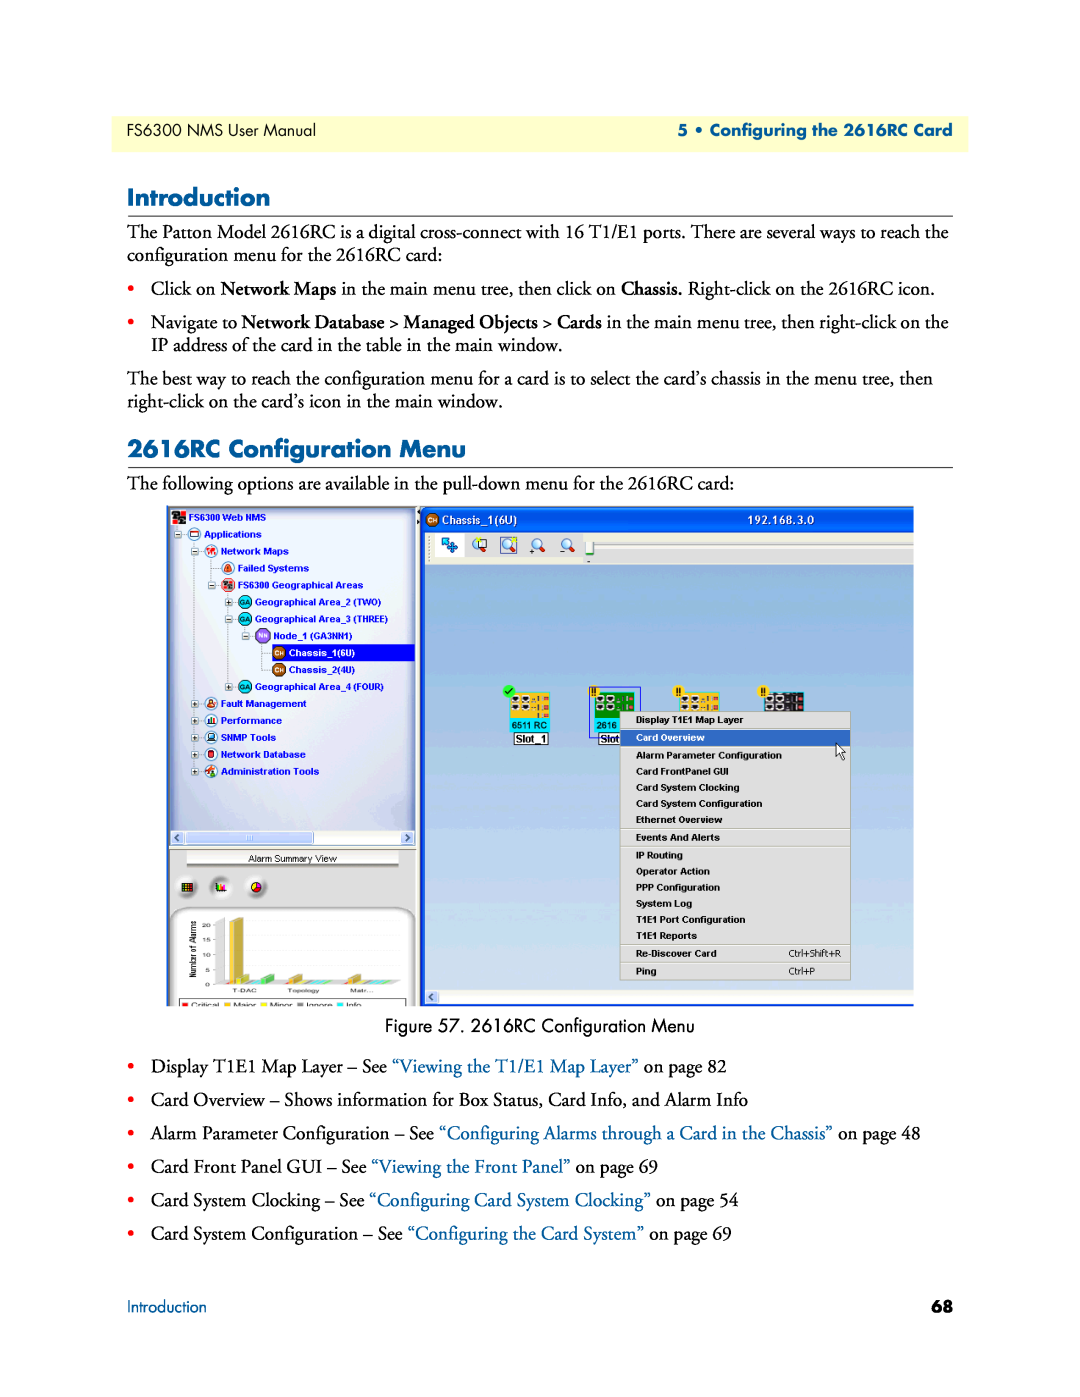 Patton electronic 6300 user manual 2616RC Configuration Menu, Introduction 